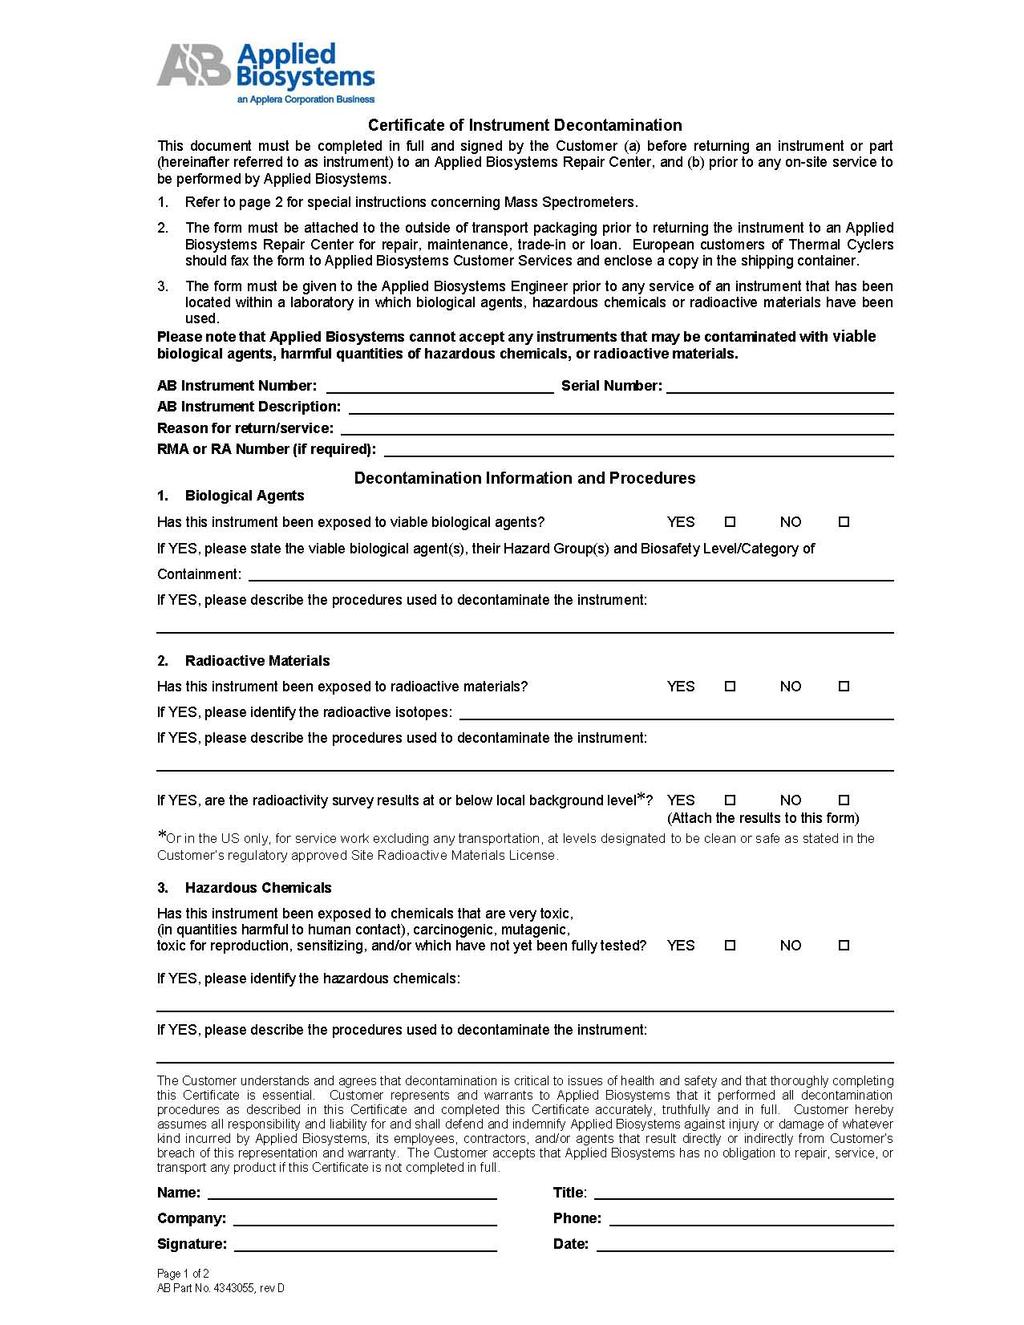 Please send to Applied Biosystems Fax: (512) 651-0201 Appendix C: Certificate of Instrument Decontamination 16 Appendix